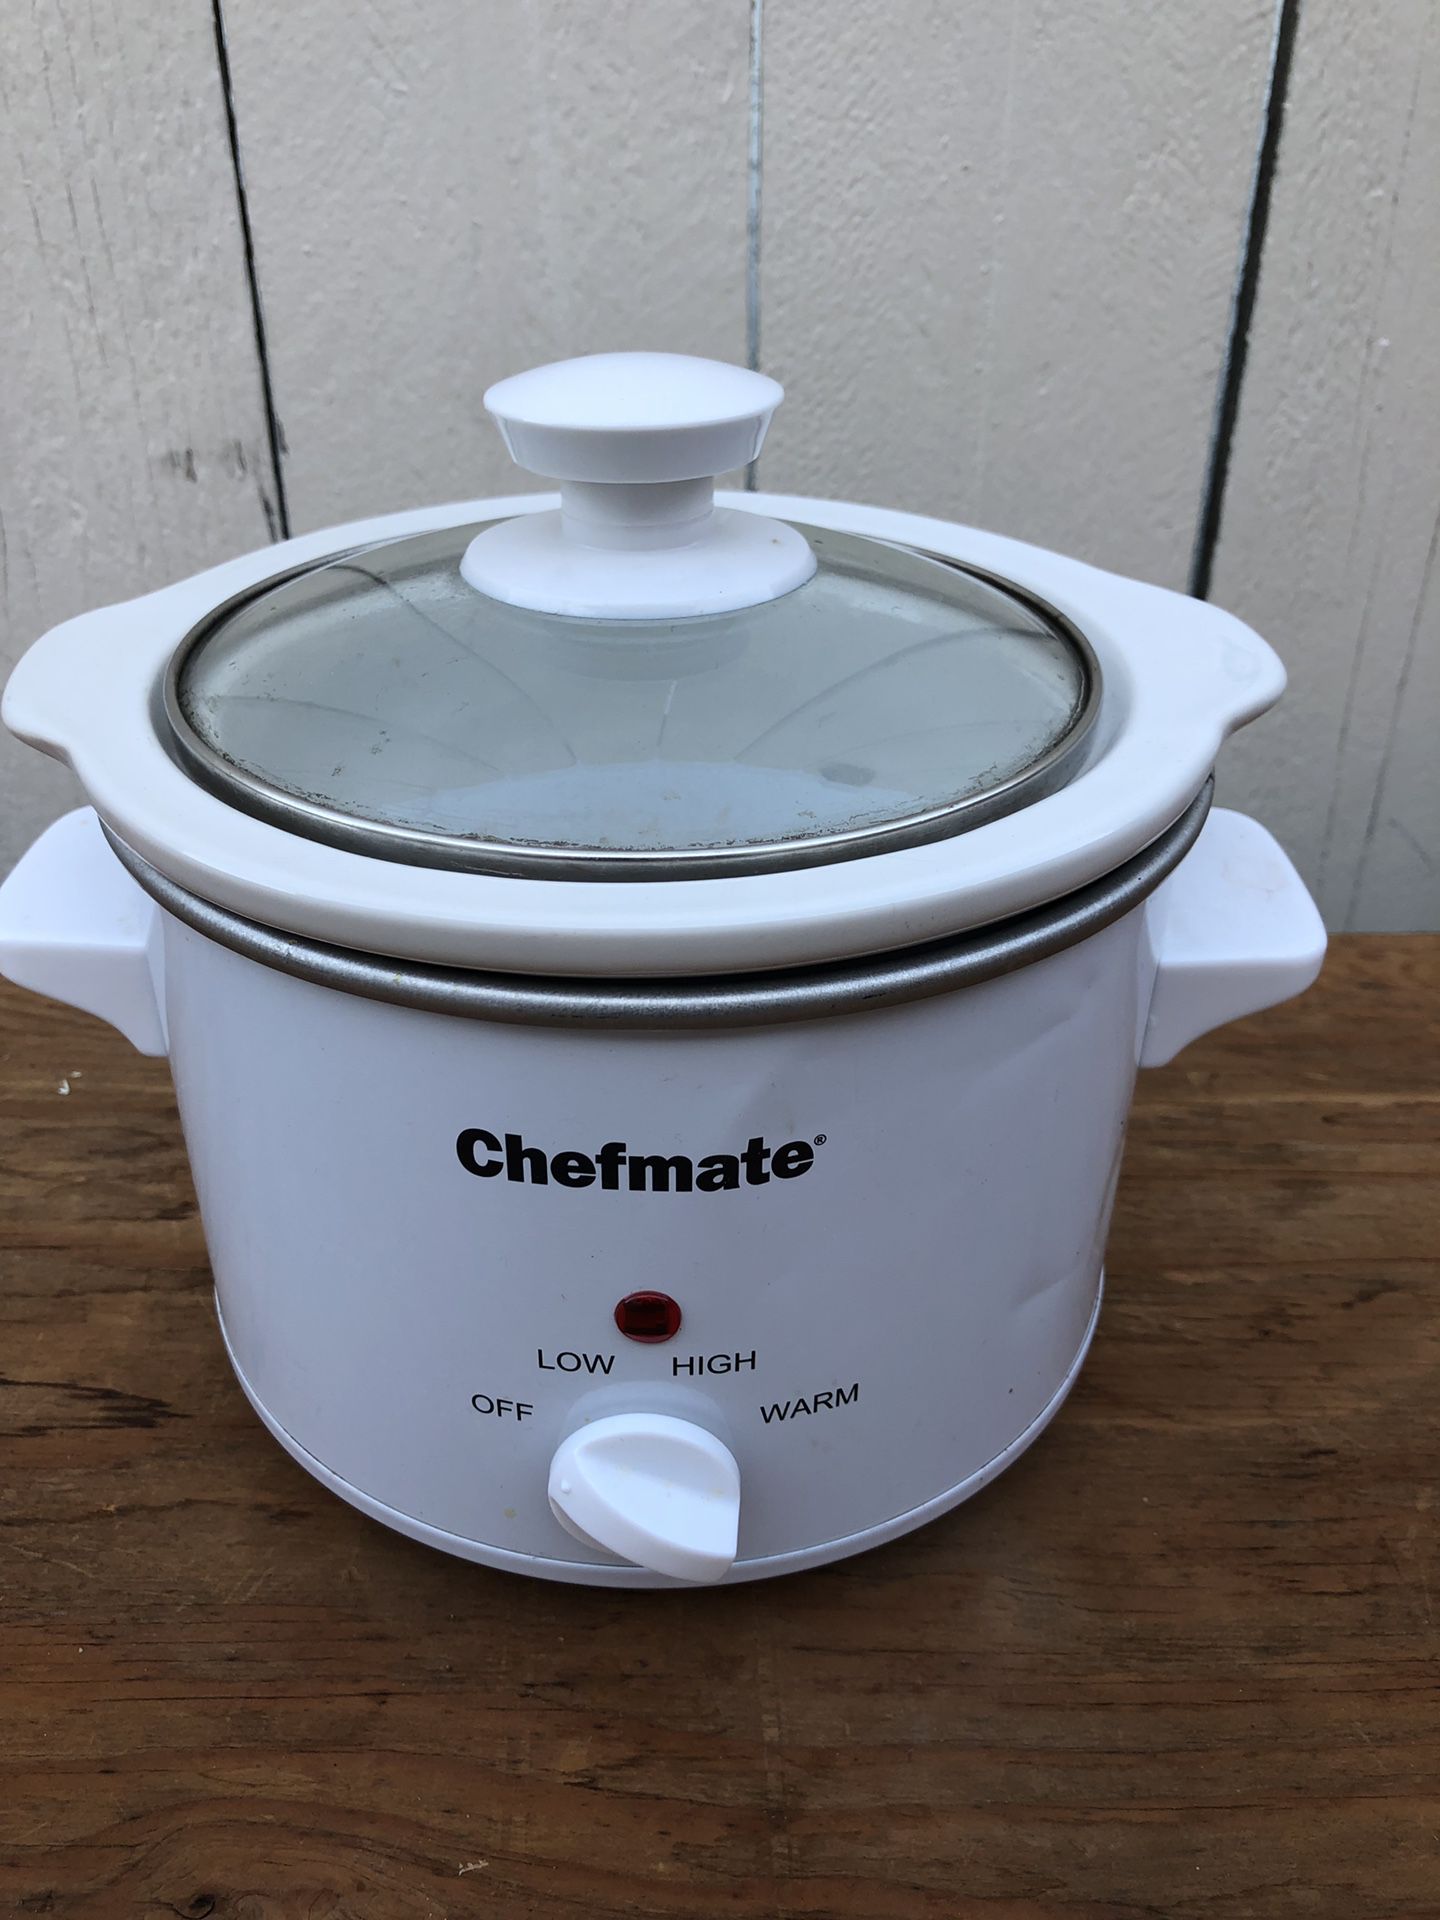 Chefmate crock pot